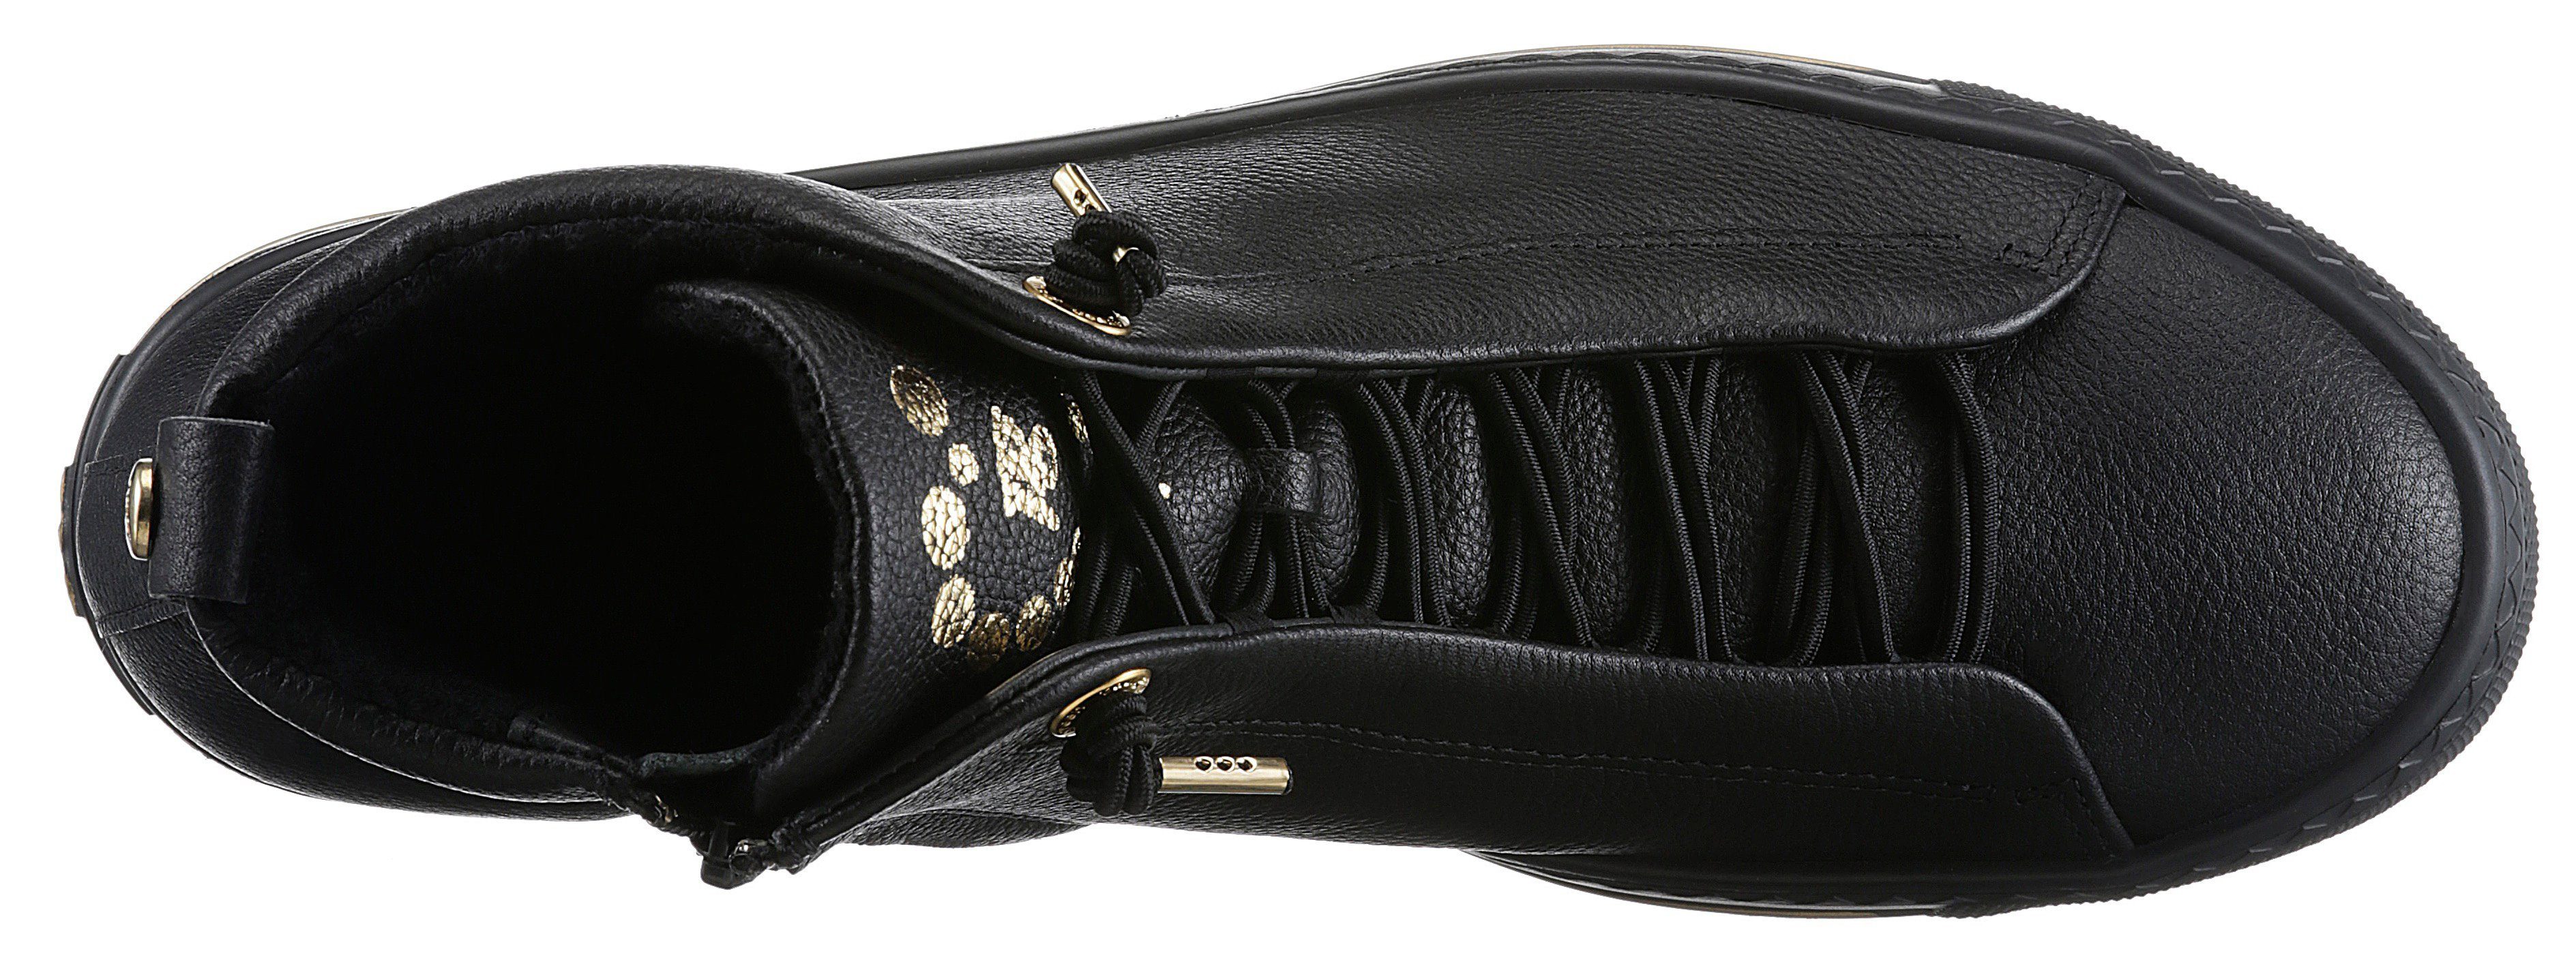 Paul Green Sneaker mit goldfarbenen Details schwarz